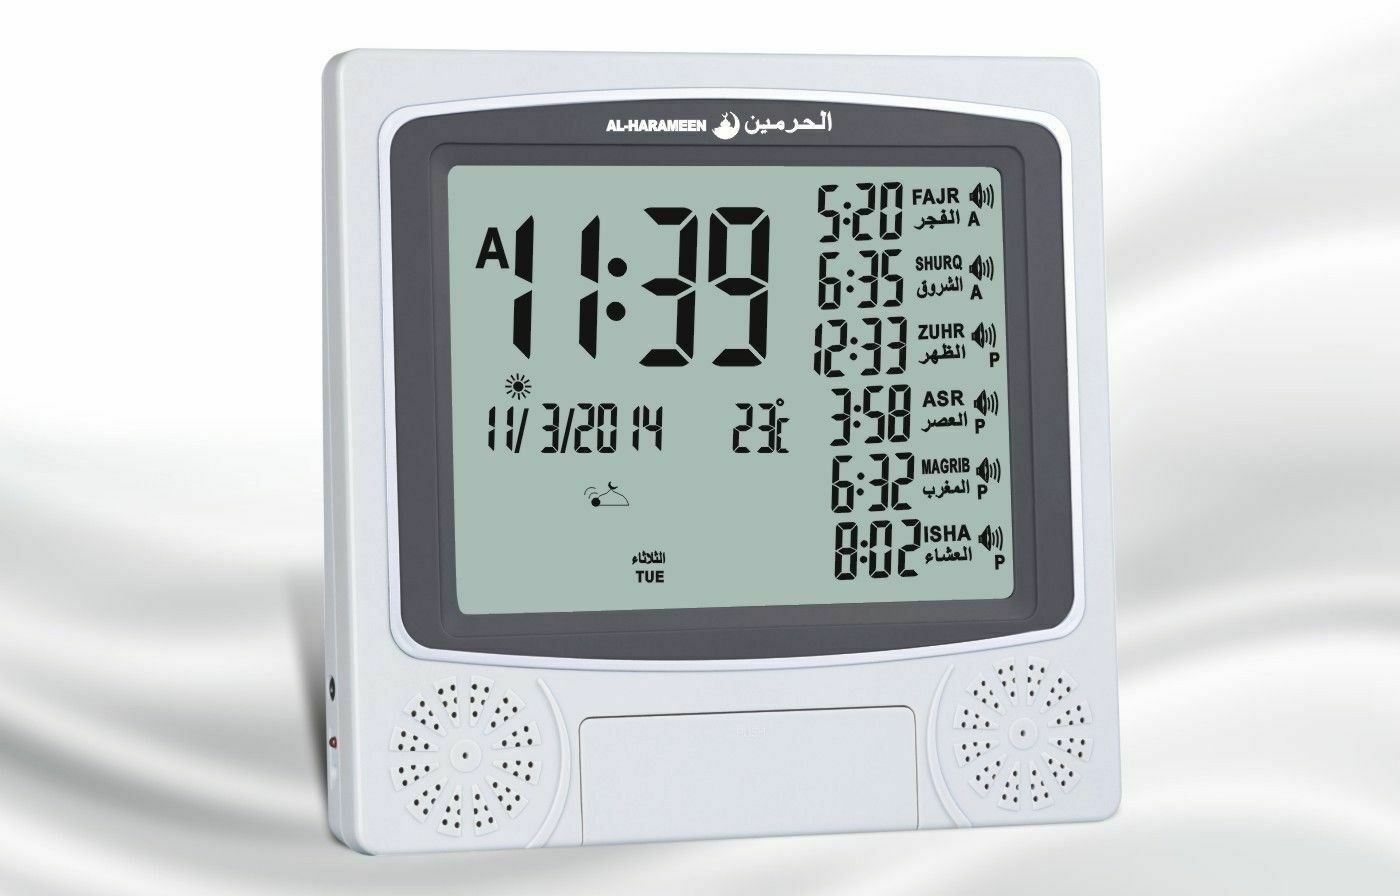 Al Harameen Azan Clock, Model: (SH -370) - Smile Europe Wholesale 